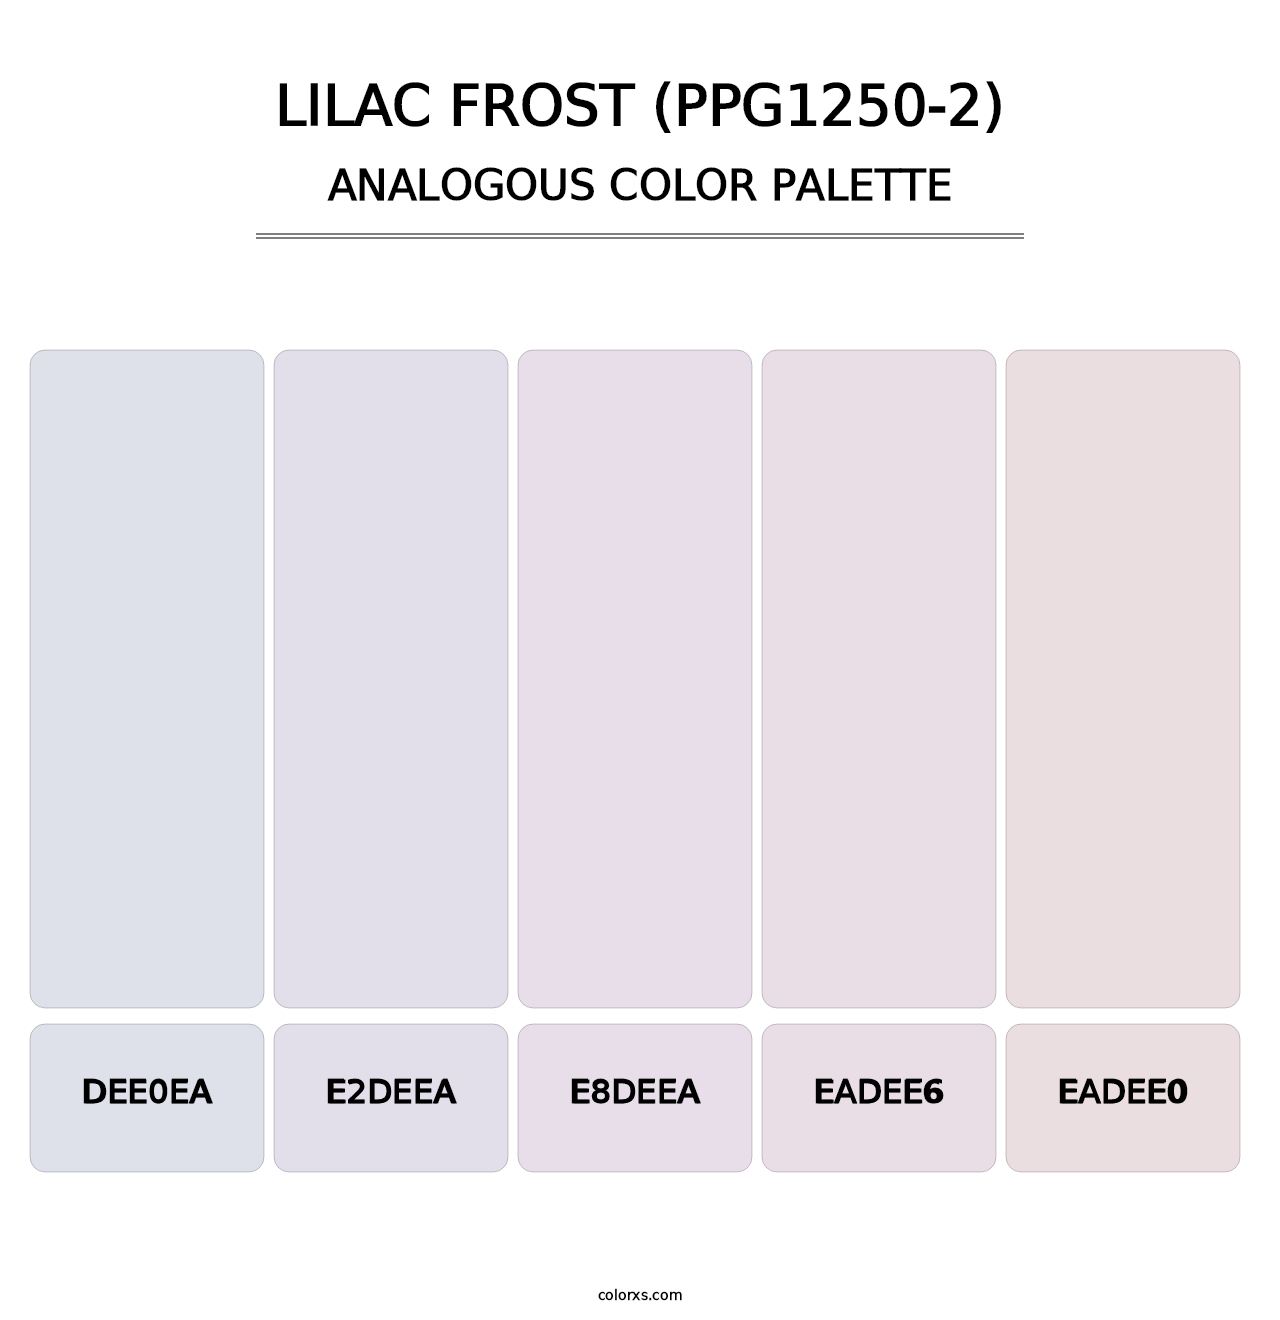 Lilac Frost (PPG1250-2) - Analogous Color Palette